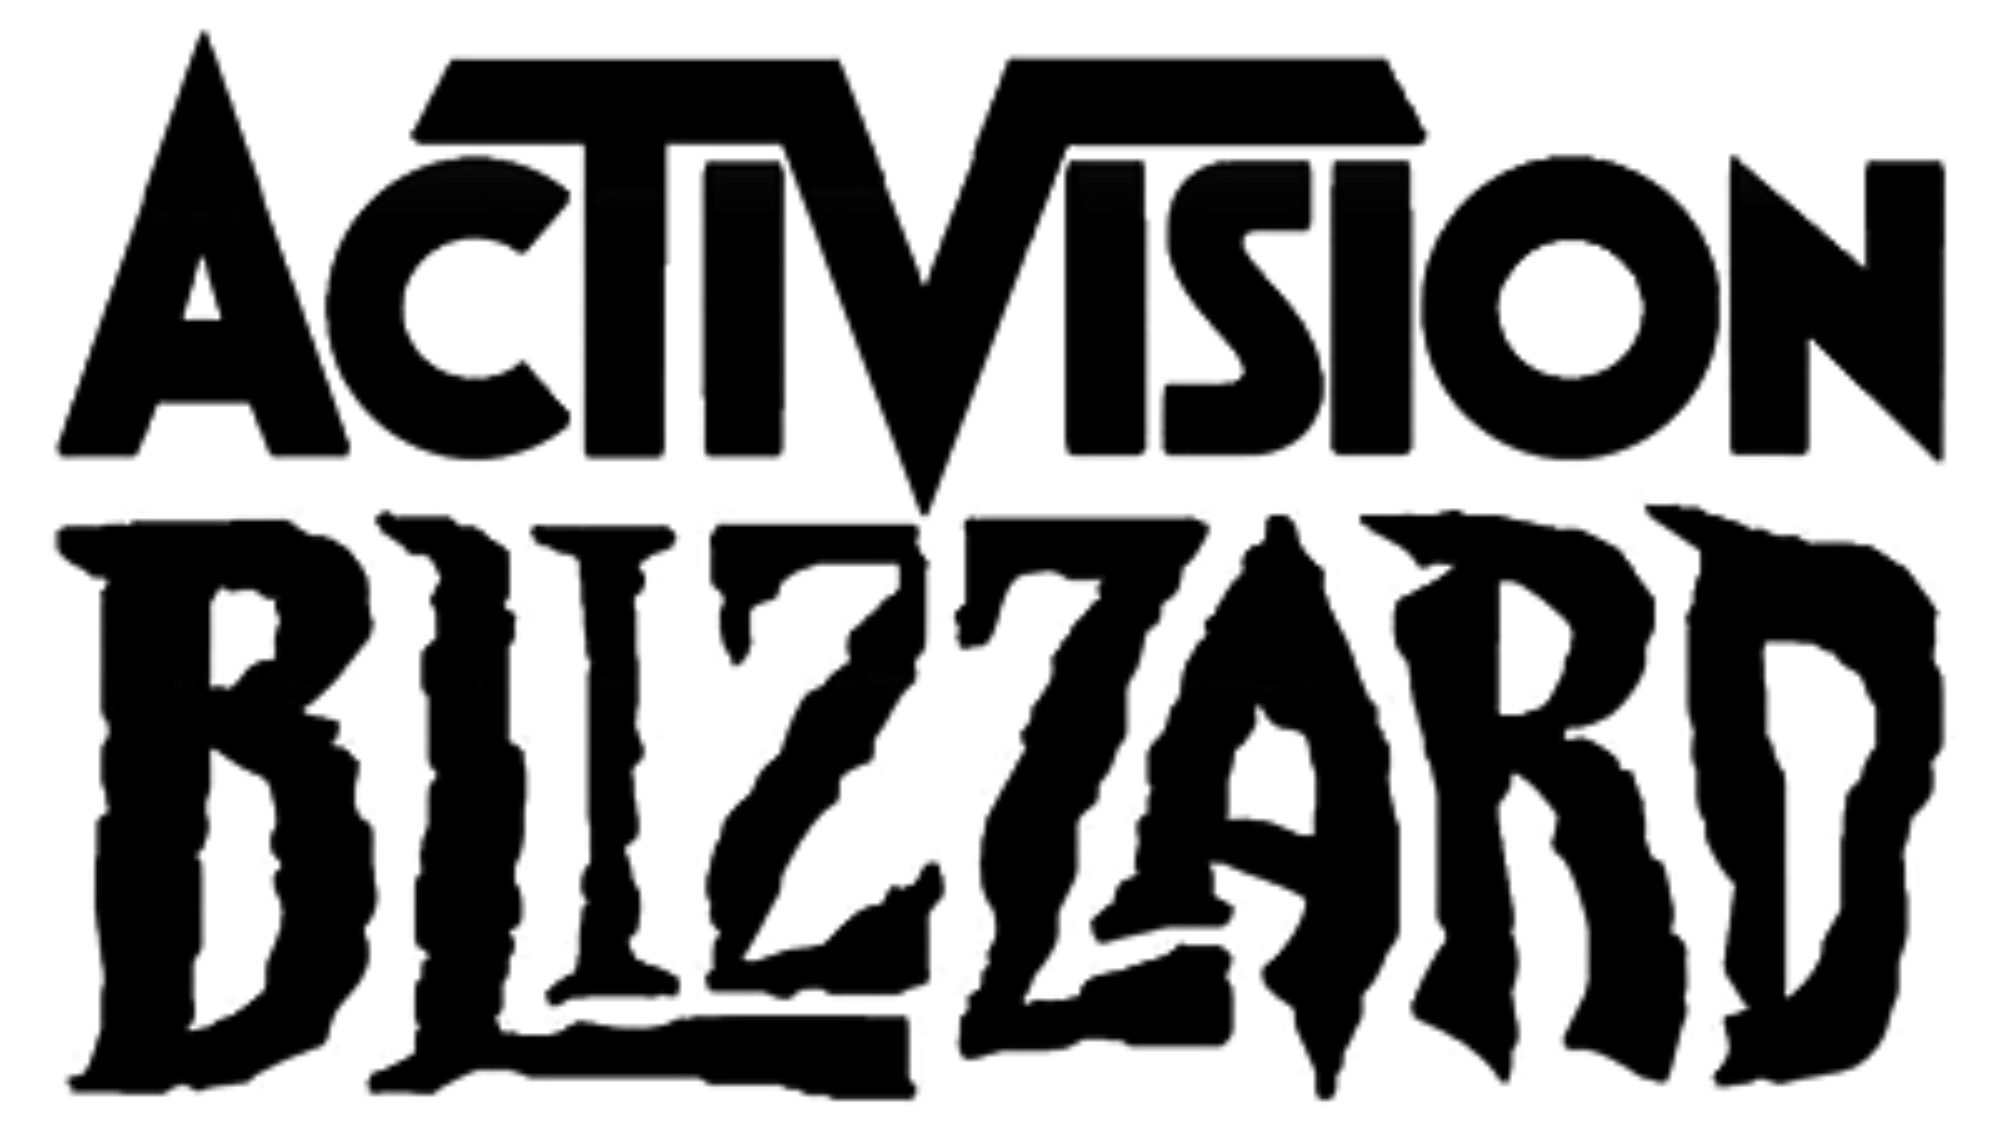 Blizzard Logo - File:Activision-blizzard logo Black.svg - Wikimedia Commons